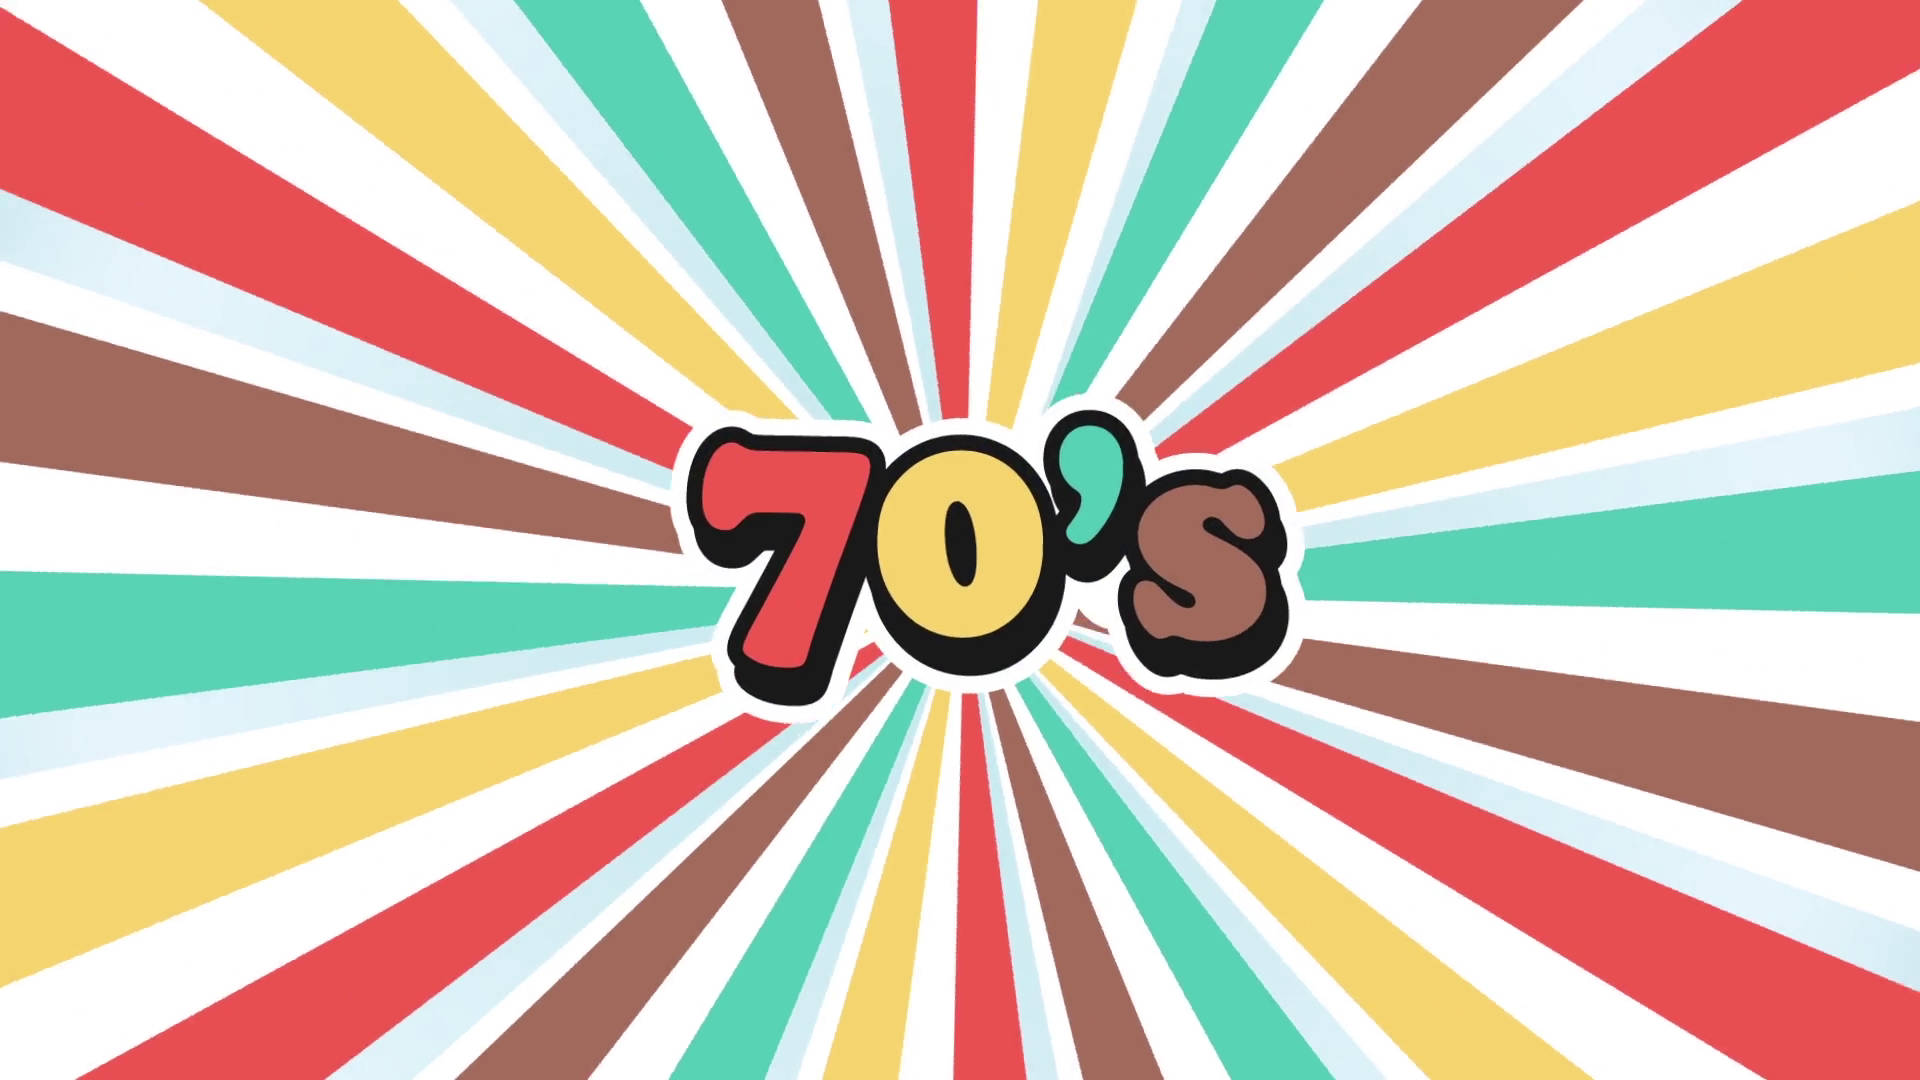 Free 70s Wallpaper Downloads, 70s Wallpaper for FREE